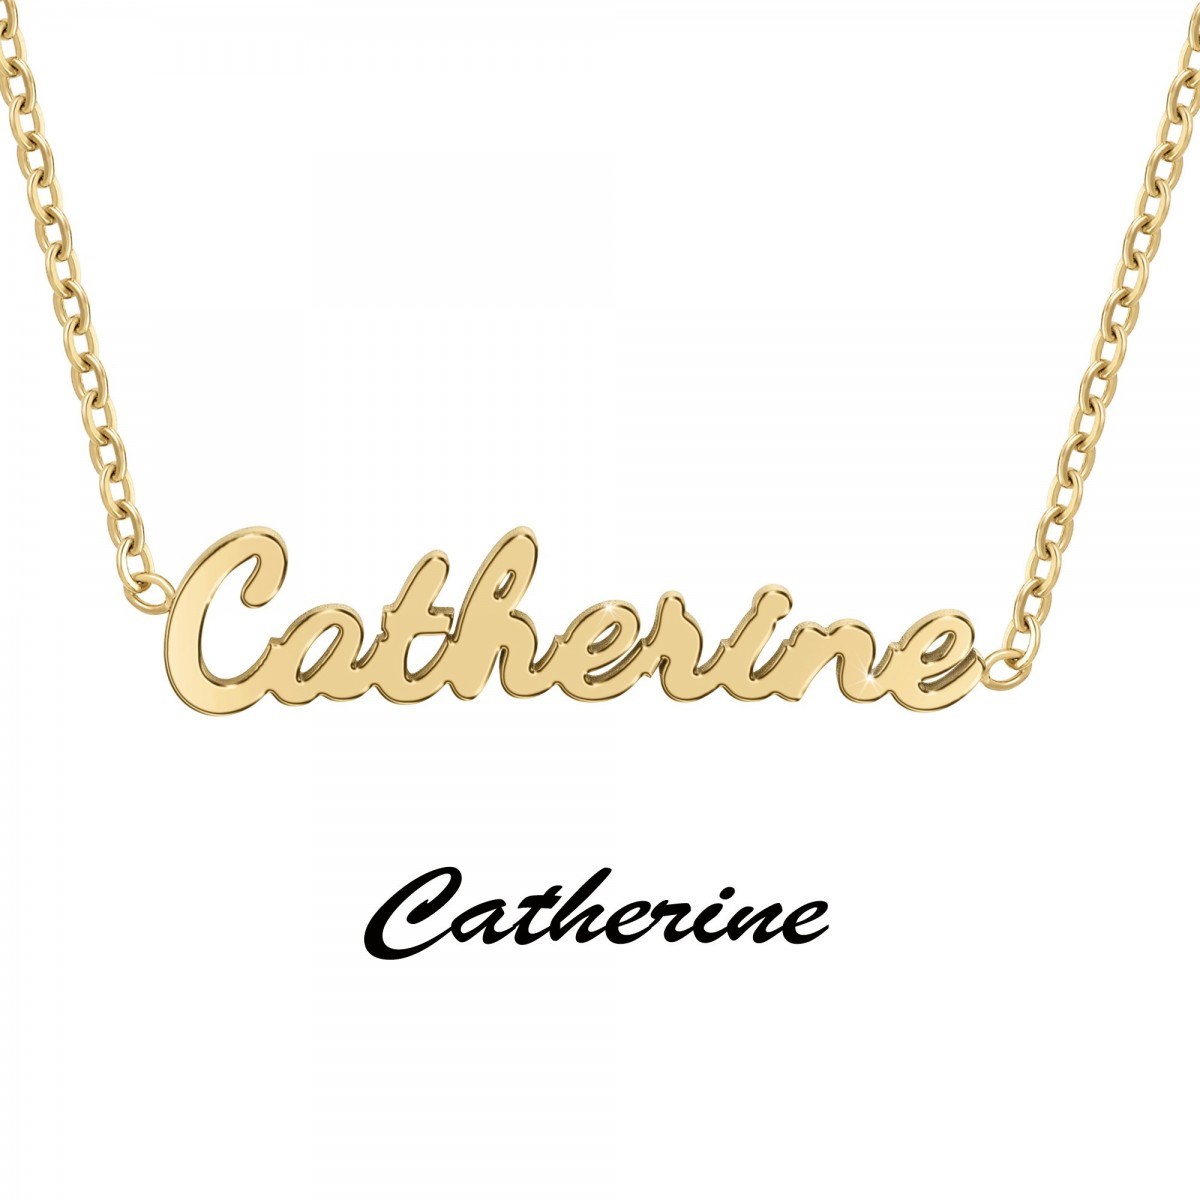 Catherine - Collier prénom - vue 3